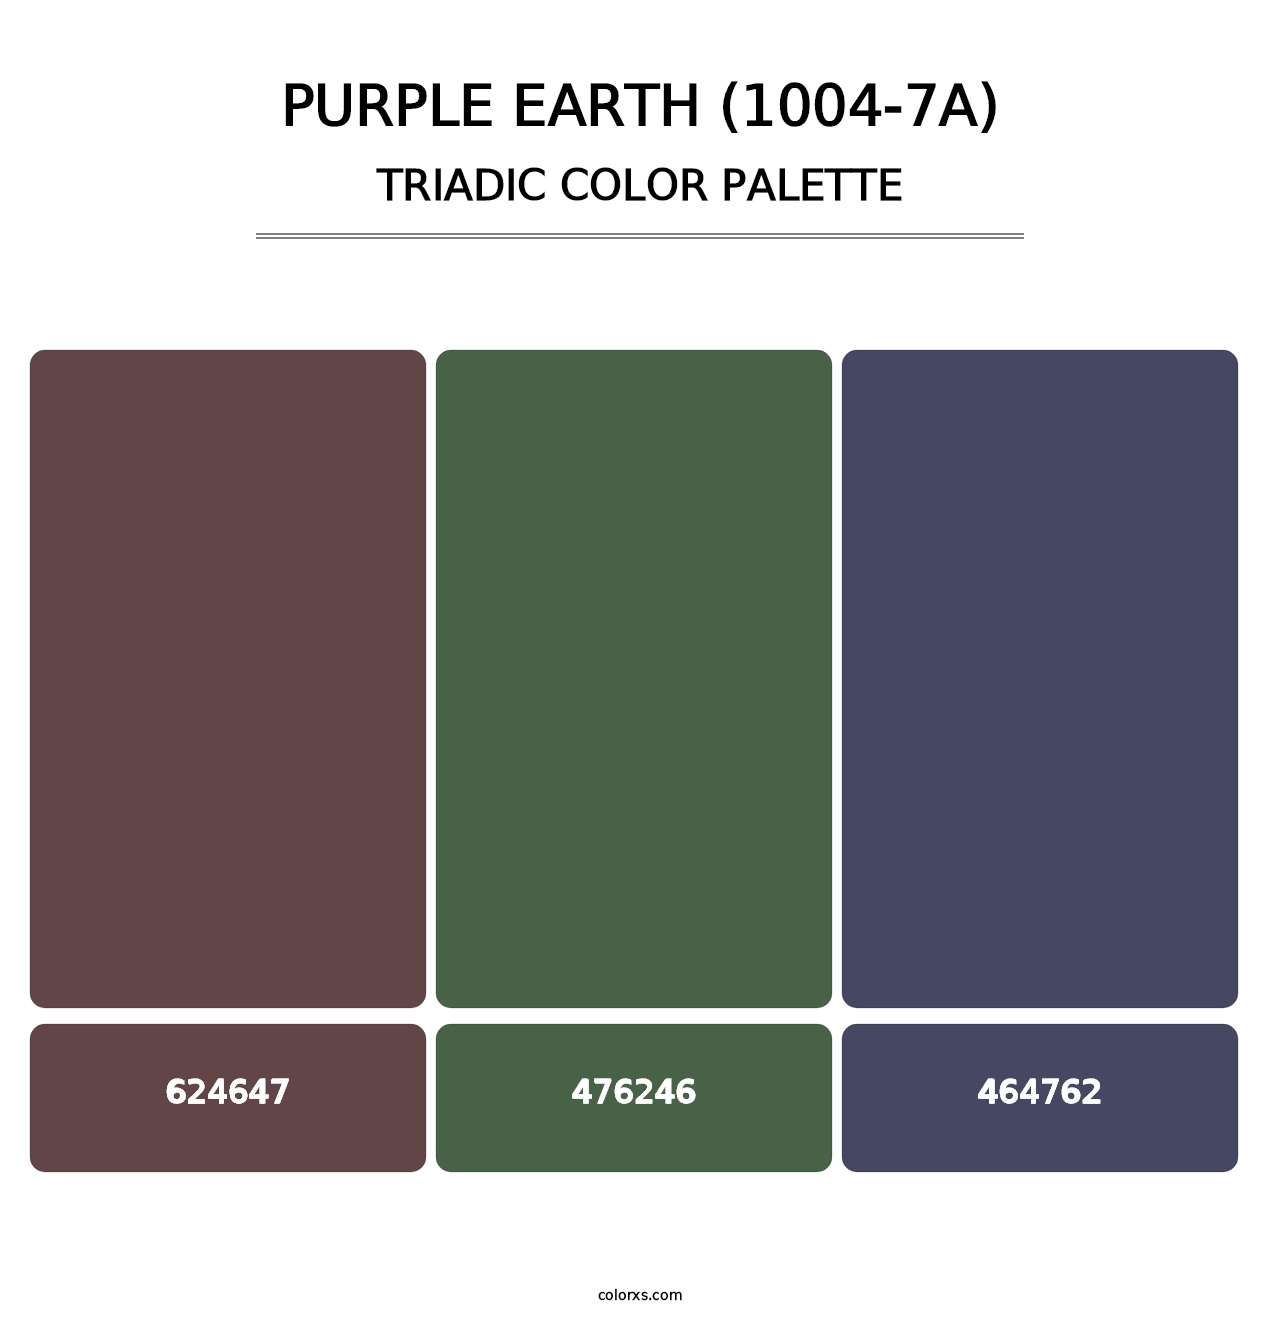 Purple Earth (1004-7A) - Triadic Color Palette